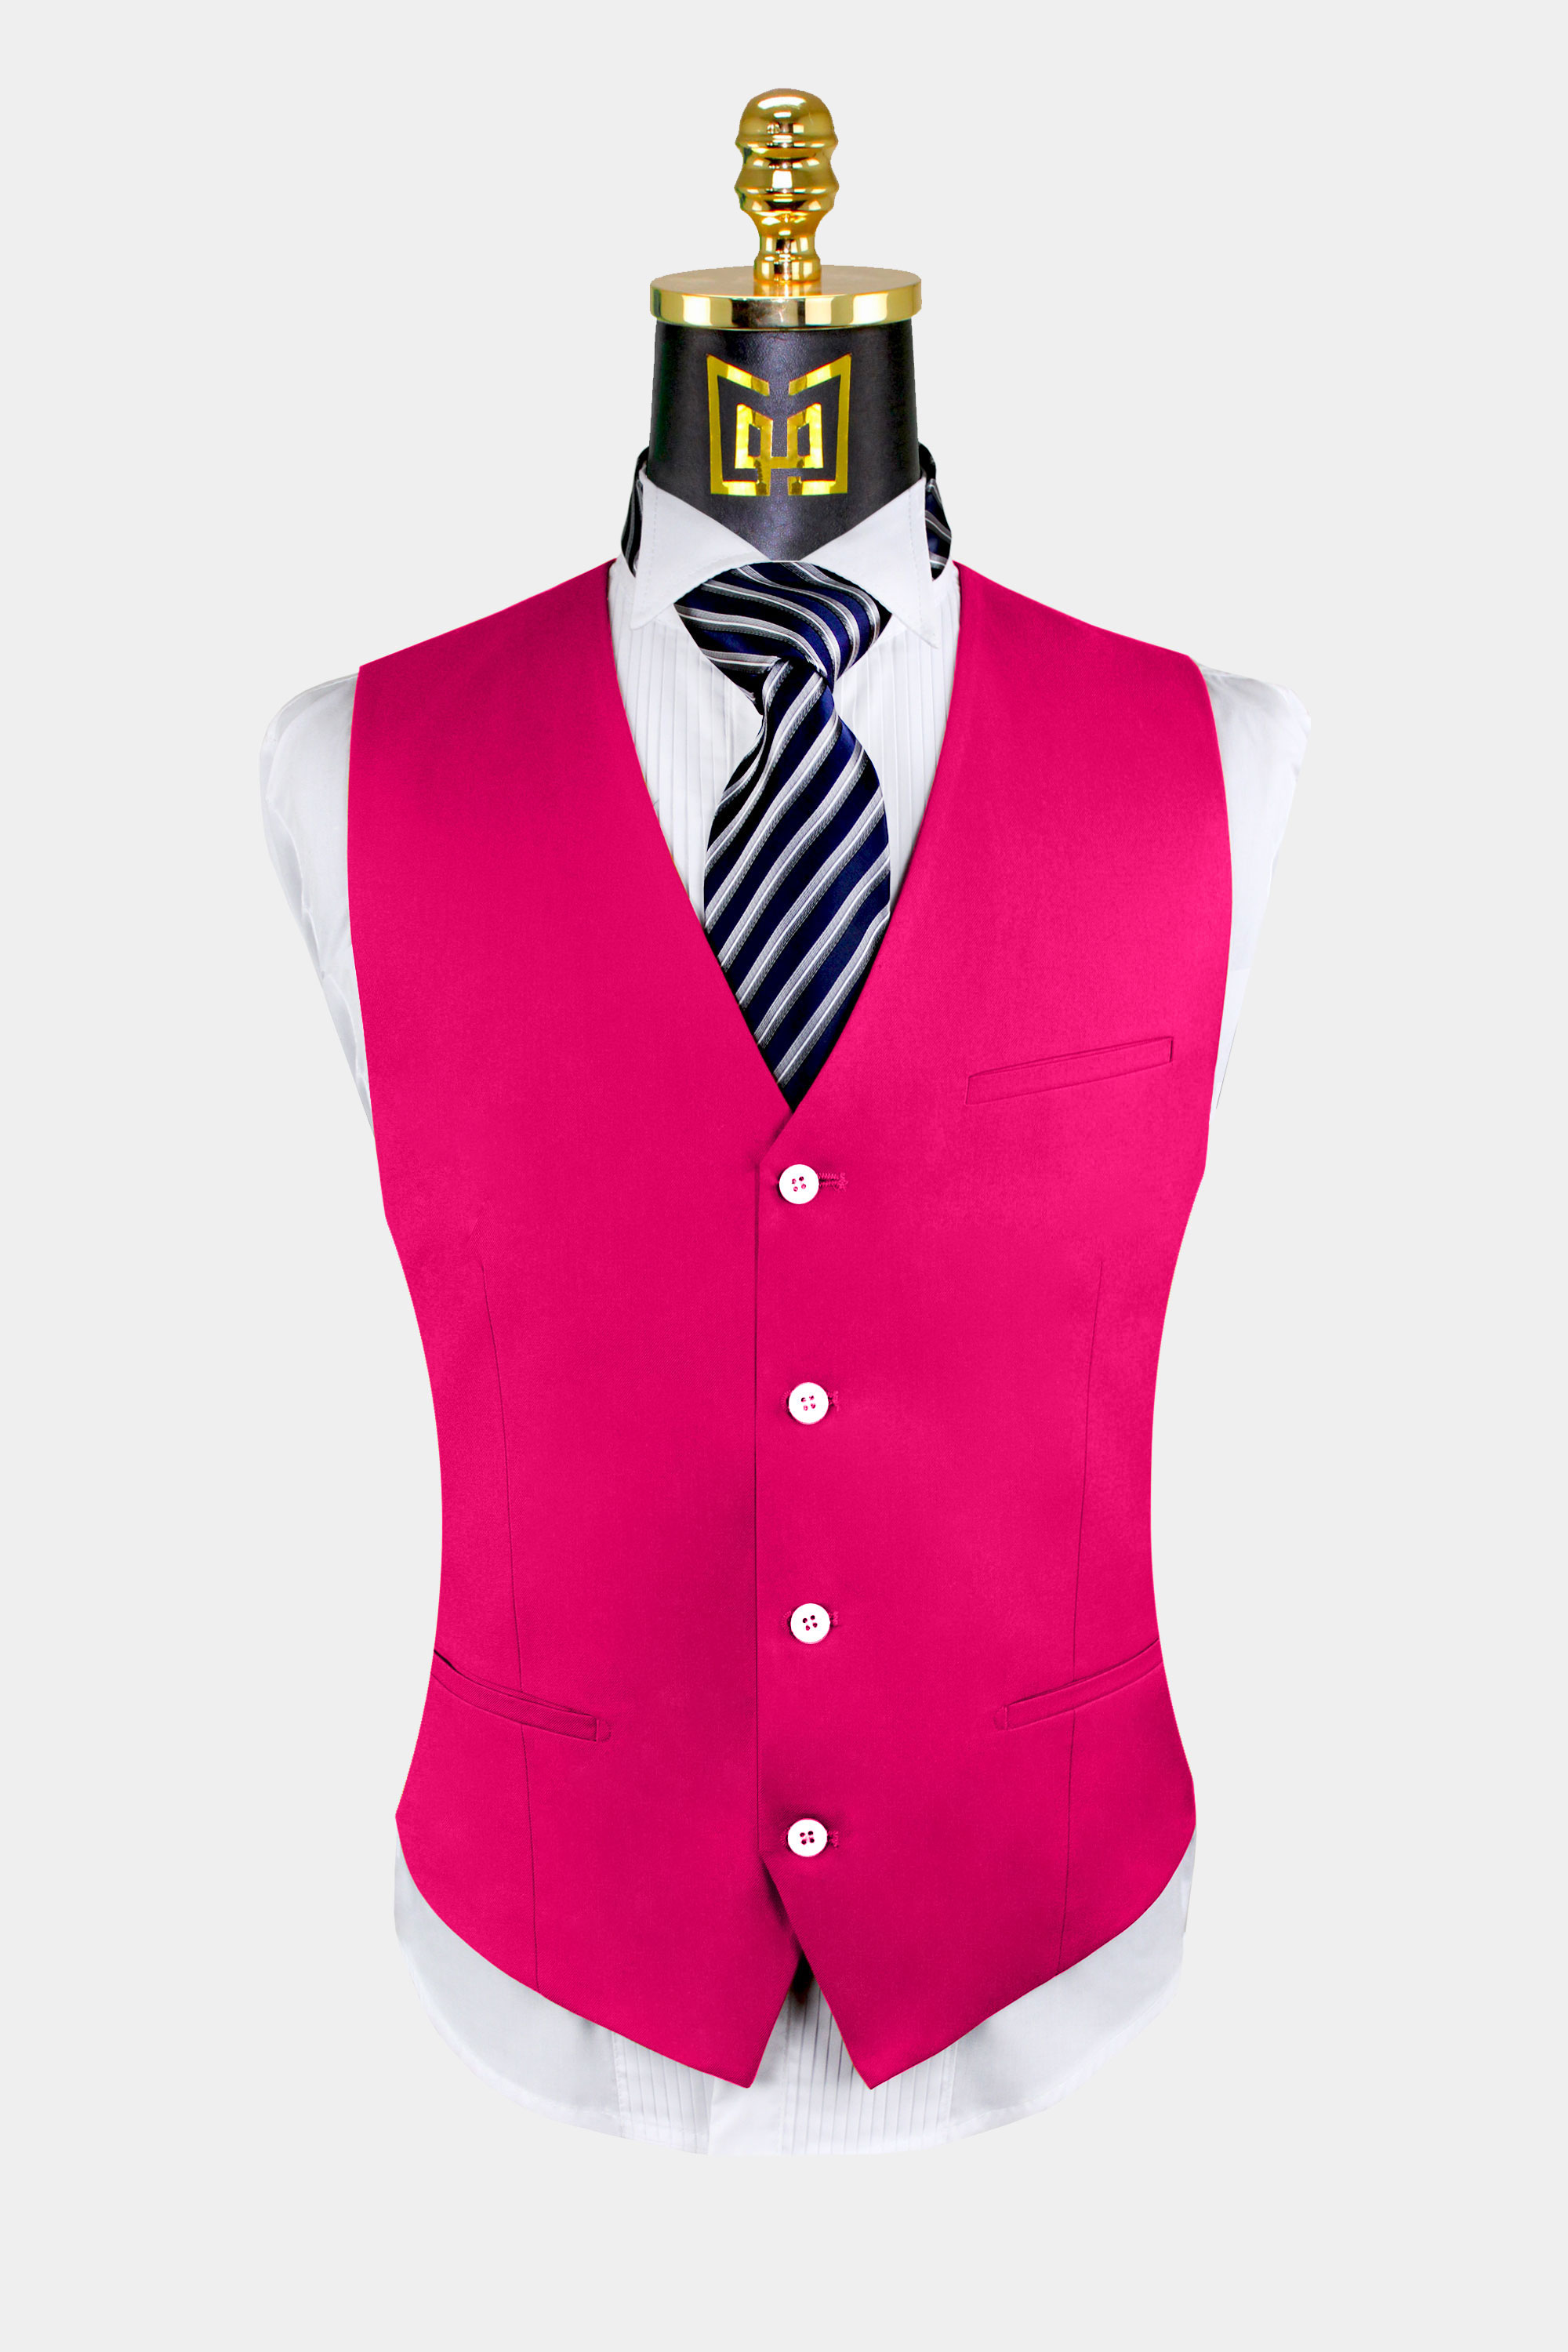 New Men's Black formal vest tuxedo Waistcoat_back Hot Pink Dots Necktie prom 